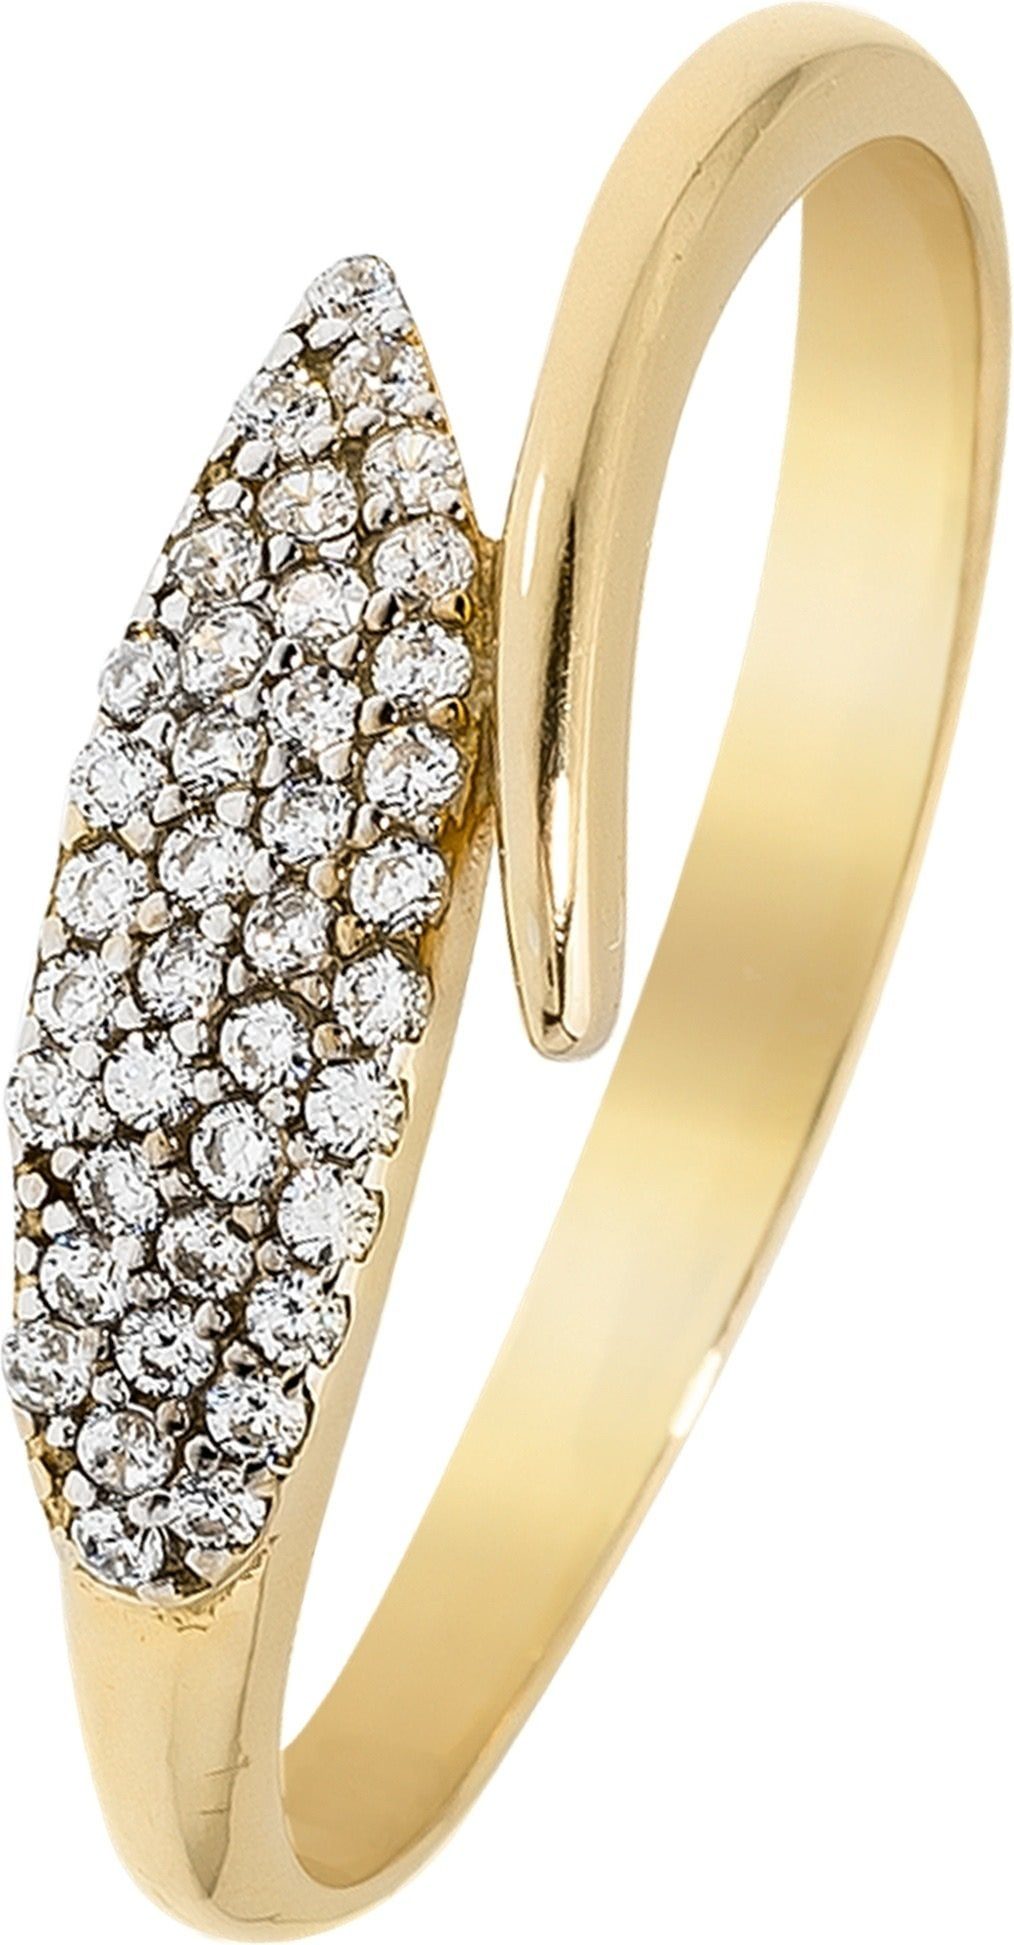 Balia Goldring Balia Ring Blatt für Damen 8K Gold (Fingerring), Fingerring Größe 60 (19,1), 333 Gelbgold - 8 Karat (Blatt gold) Gold 3 | Goldringe